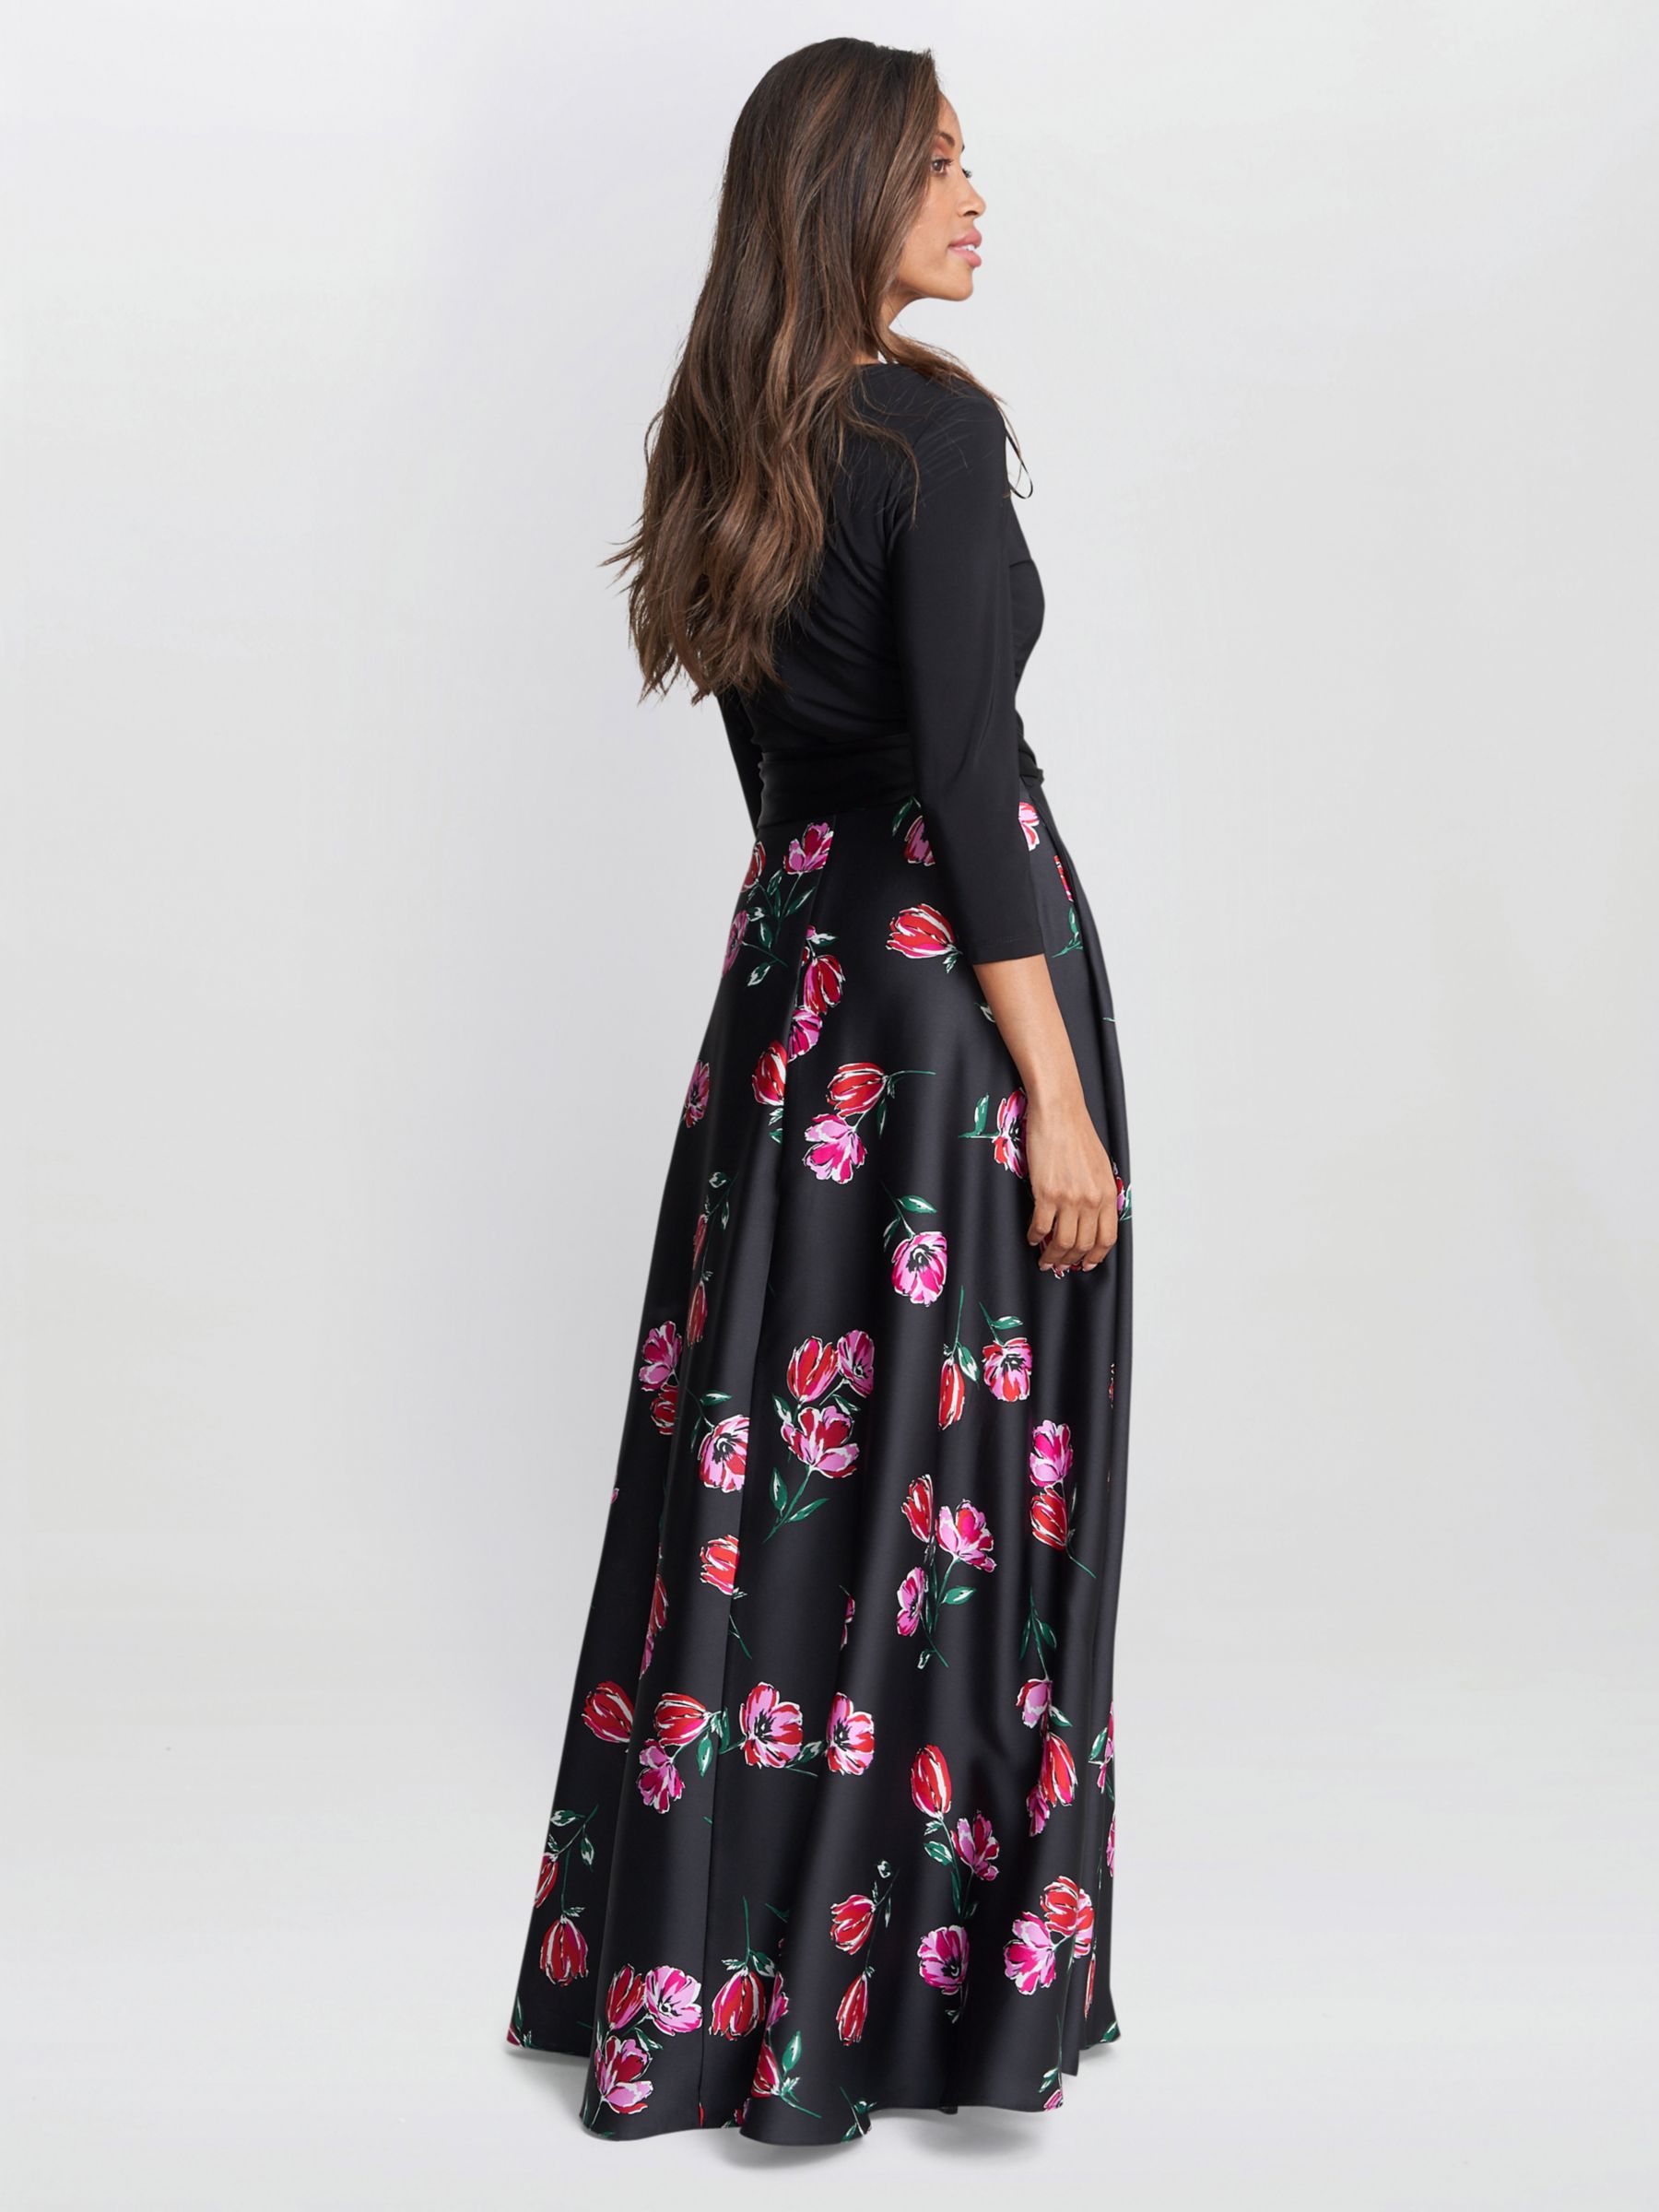 Gina Bacconi Athena Floral Satin Skirt Maxi Dress, Black/Pink, 10